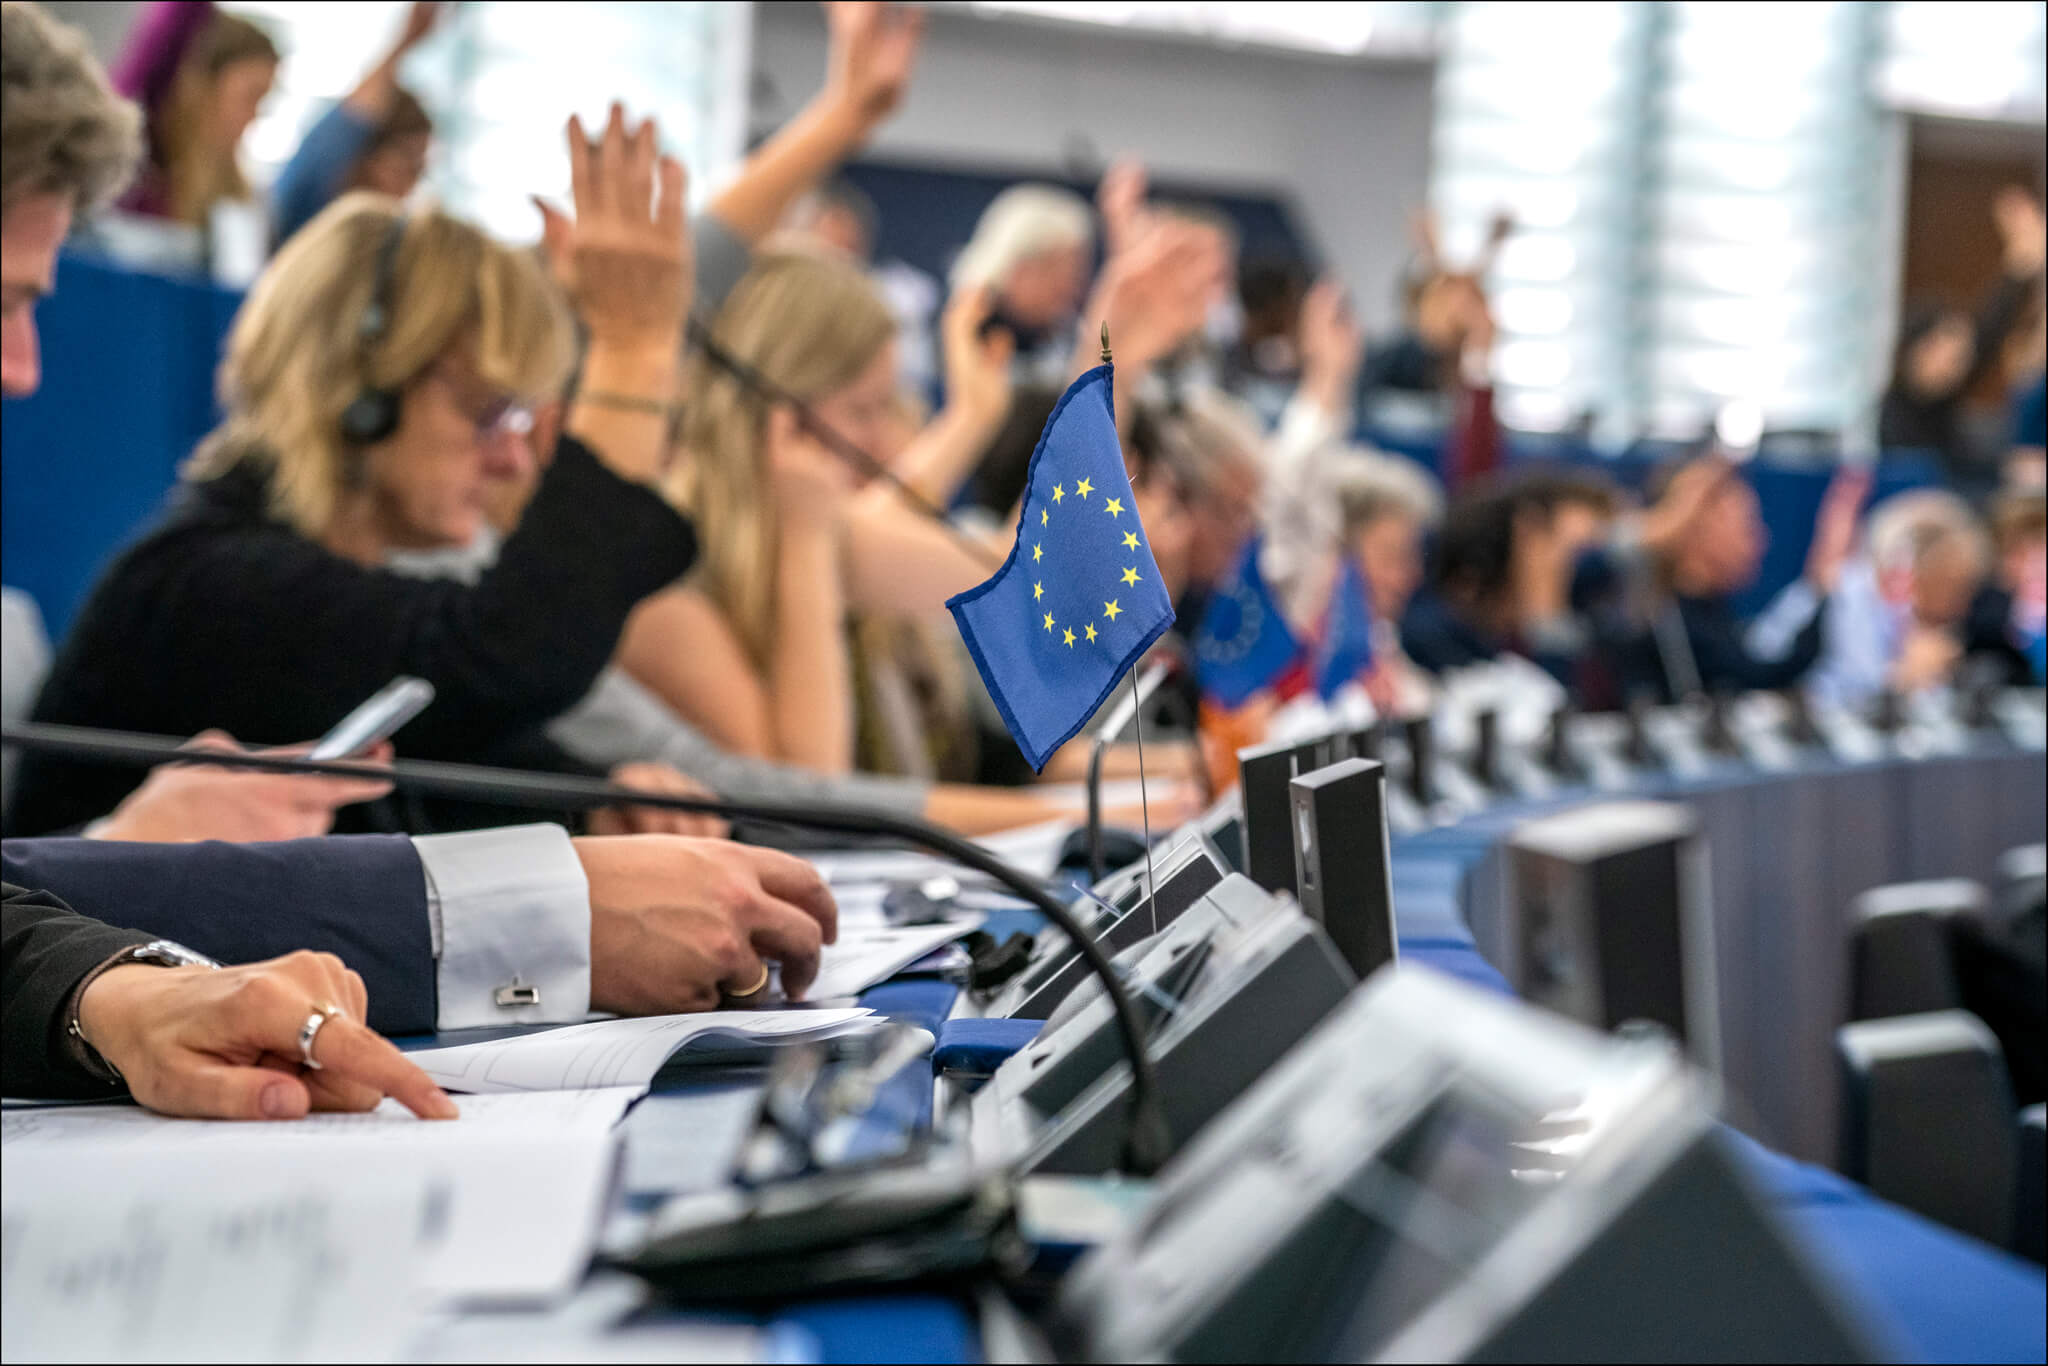 MEPs nemen hun standpunt in over het EU investeringsbudget voor 2020: 'a boost for the climate', 23 oktober 2019. © Europees Parlement / Flickr